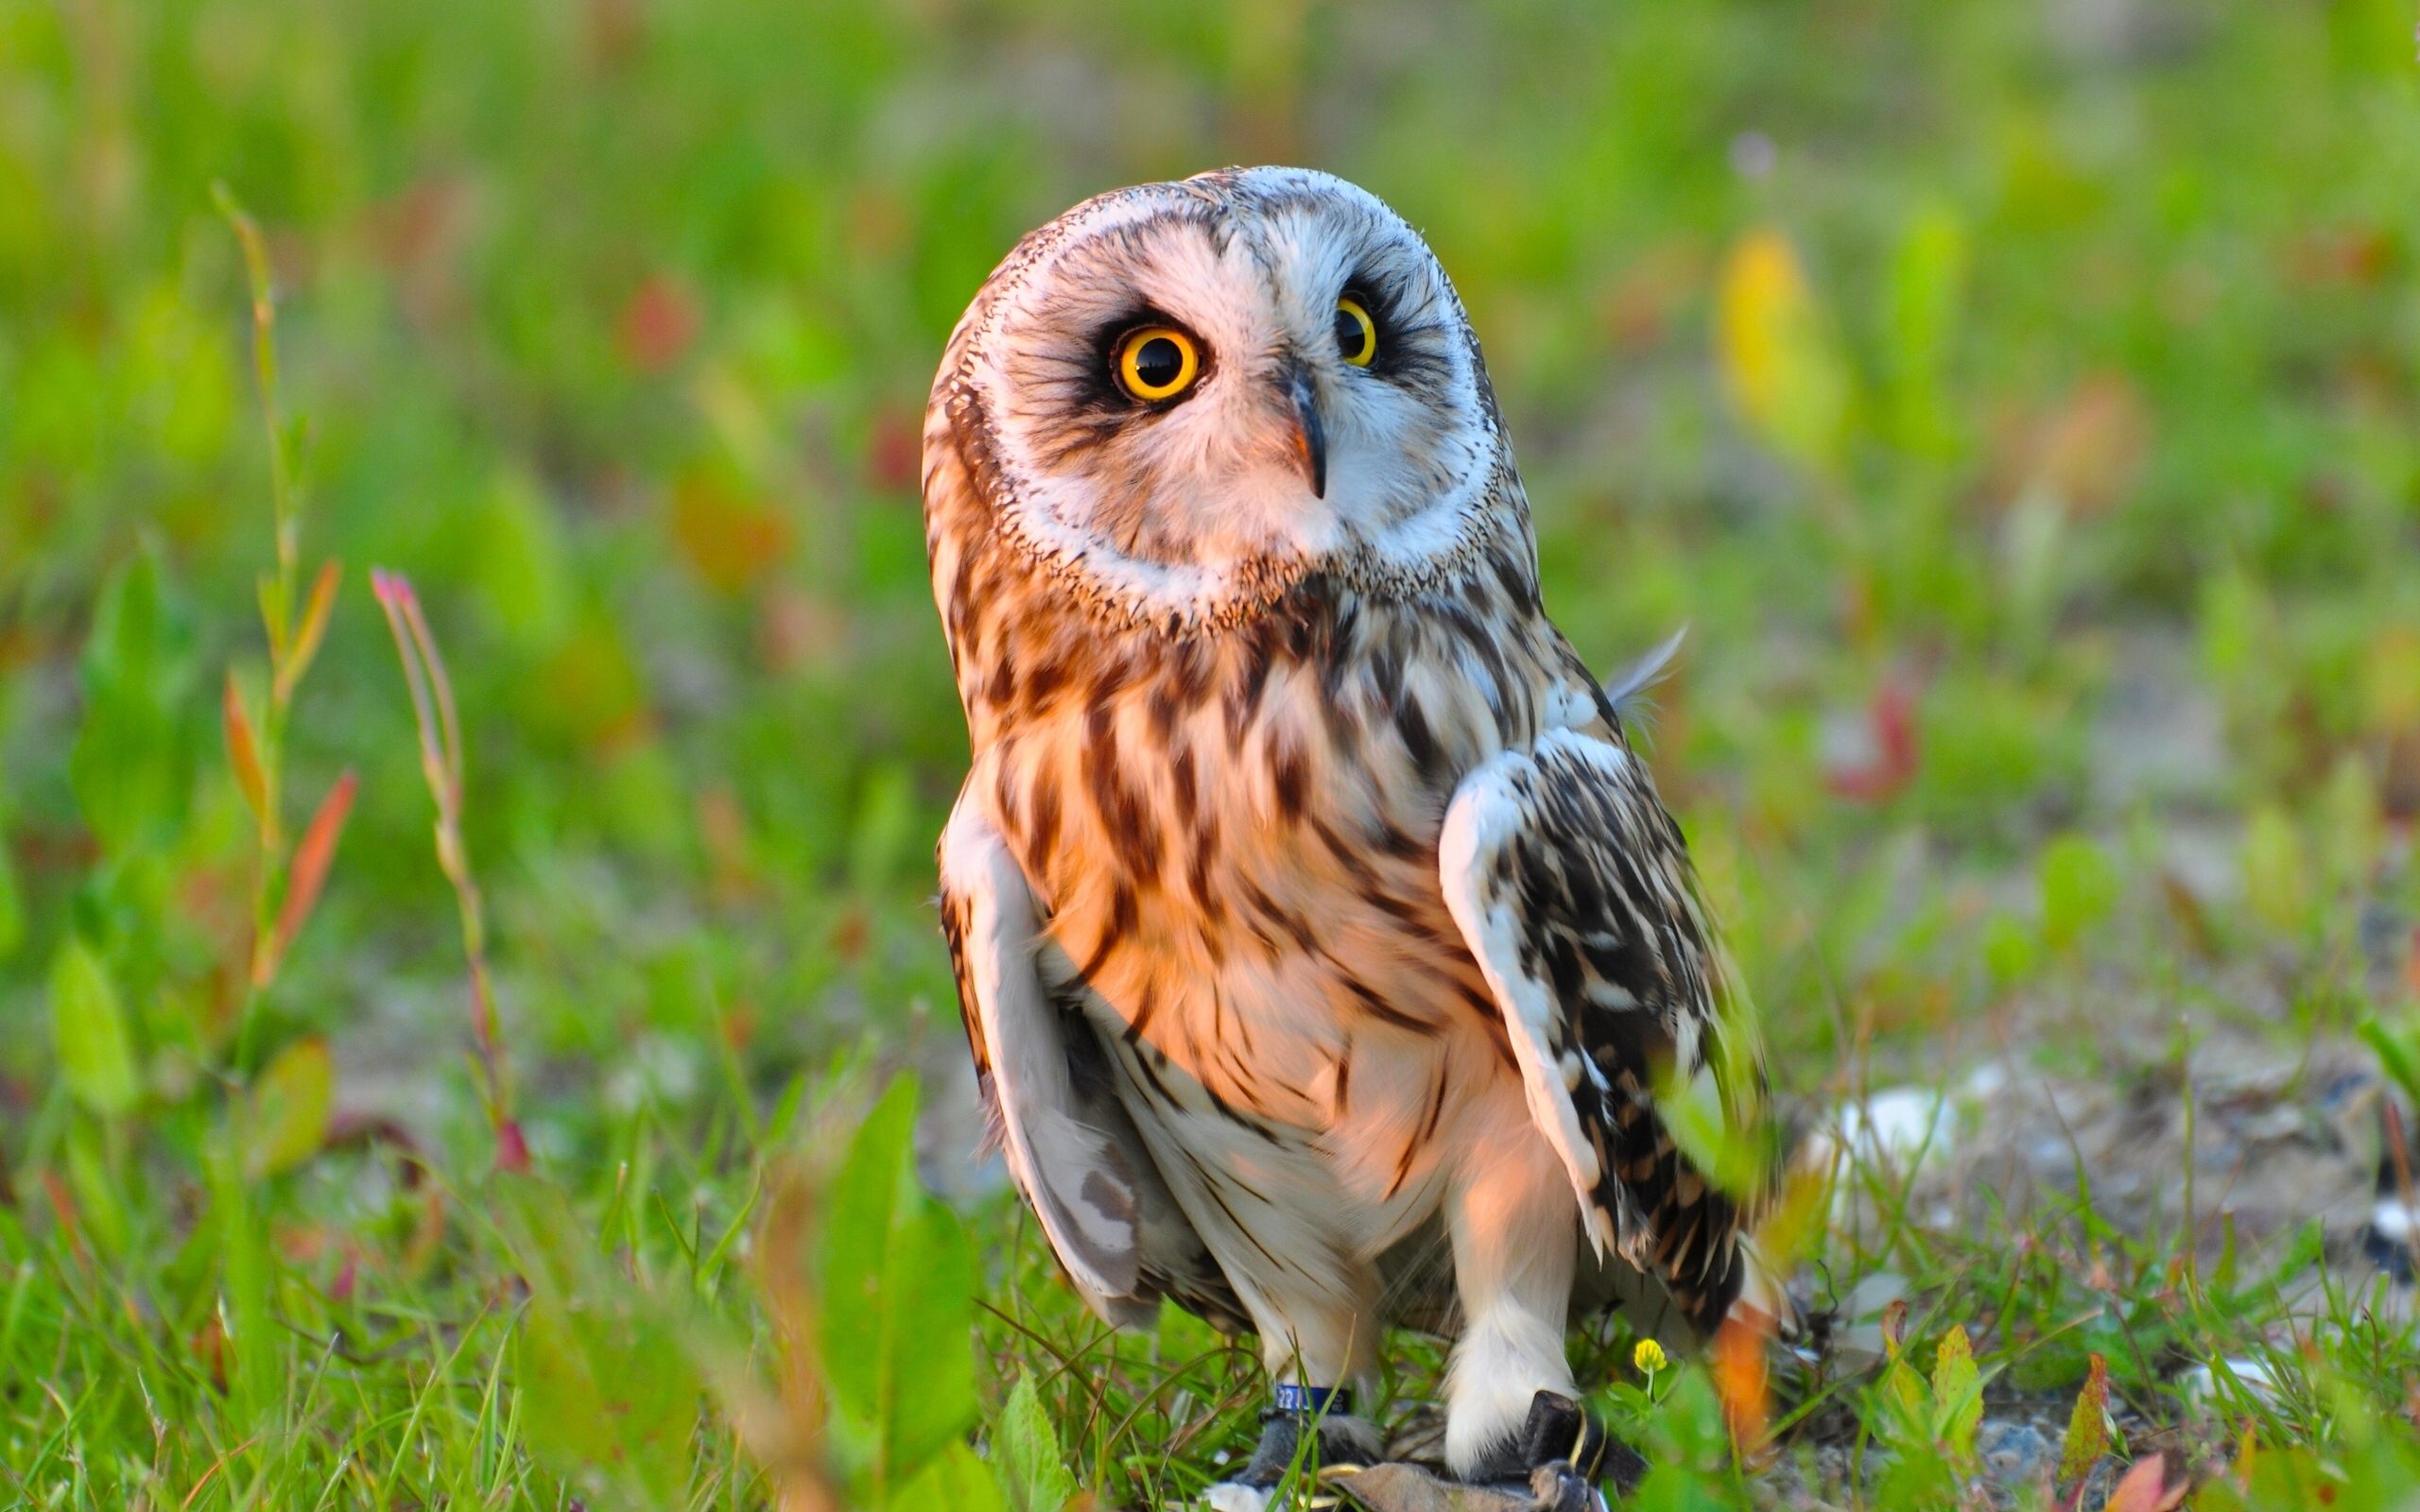 Cute Owl Bird Wallpaper HD For Desktop Amp Mobile